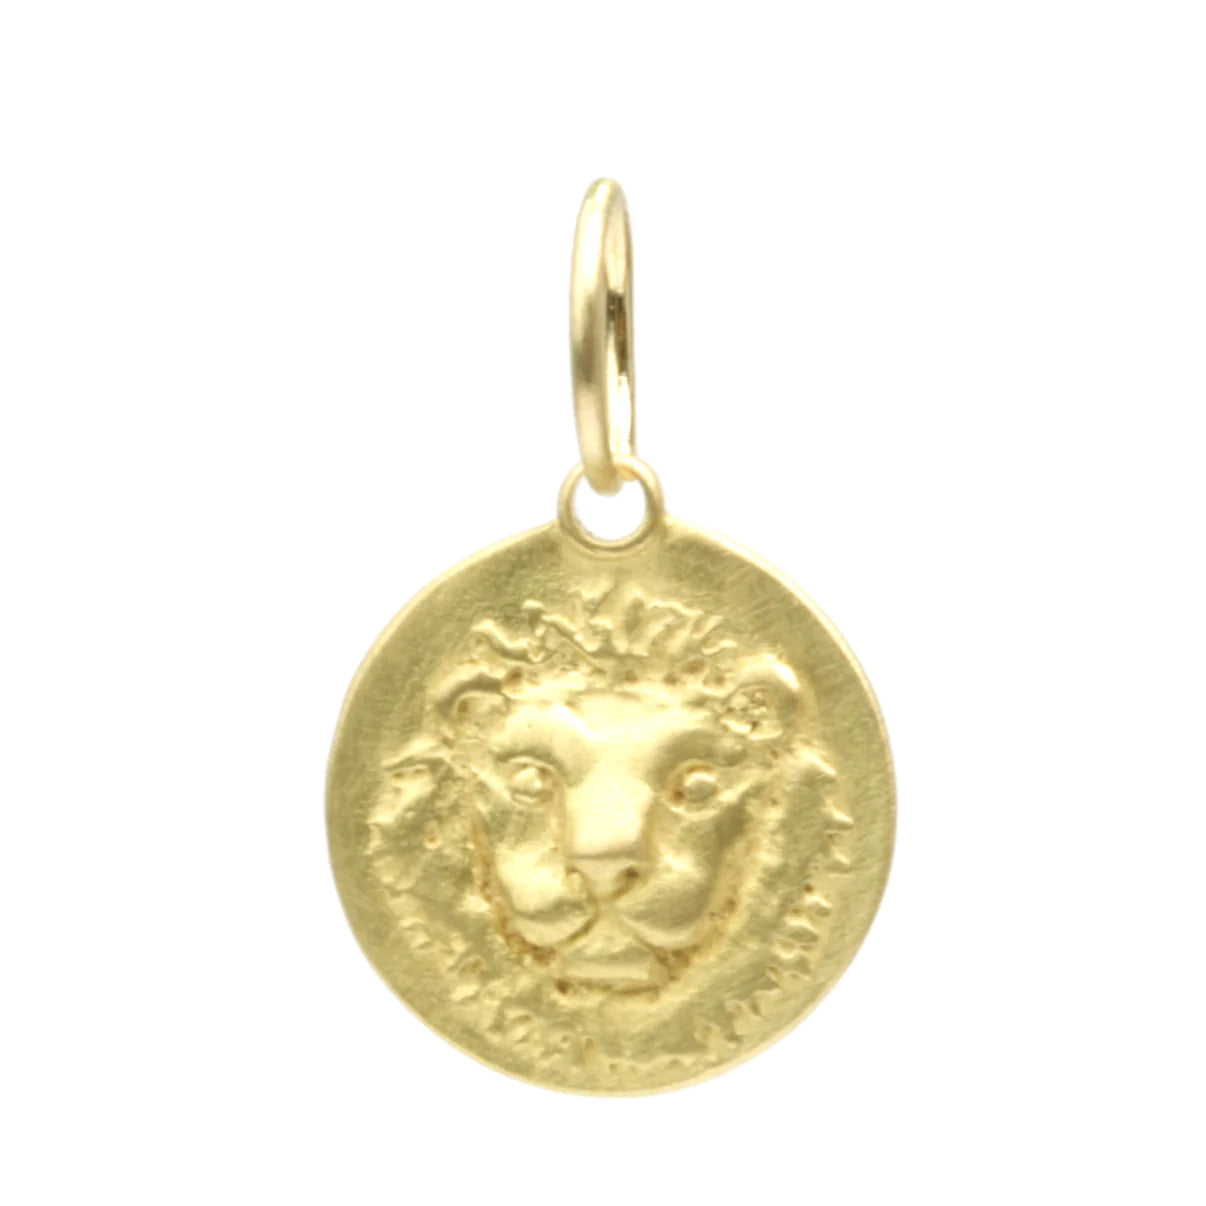 zodiac medal pendant necklace - leo